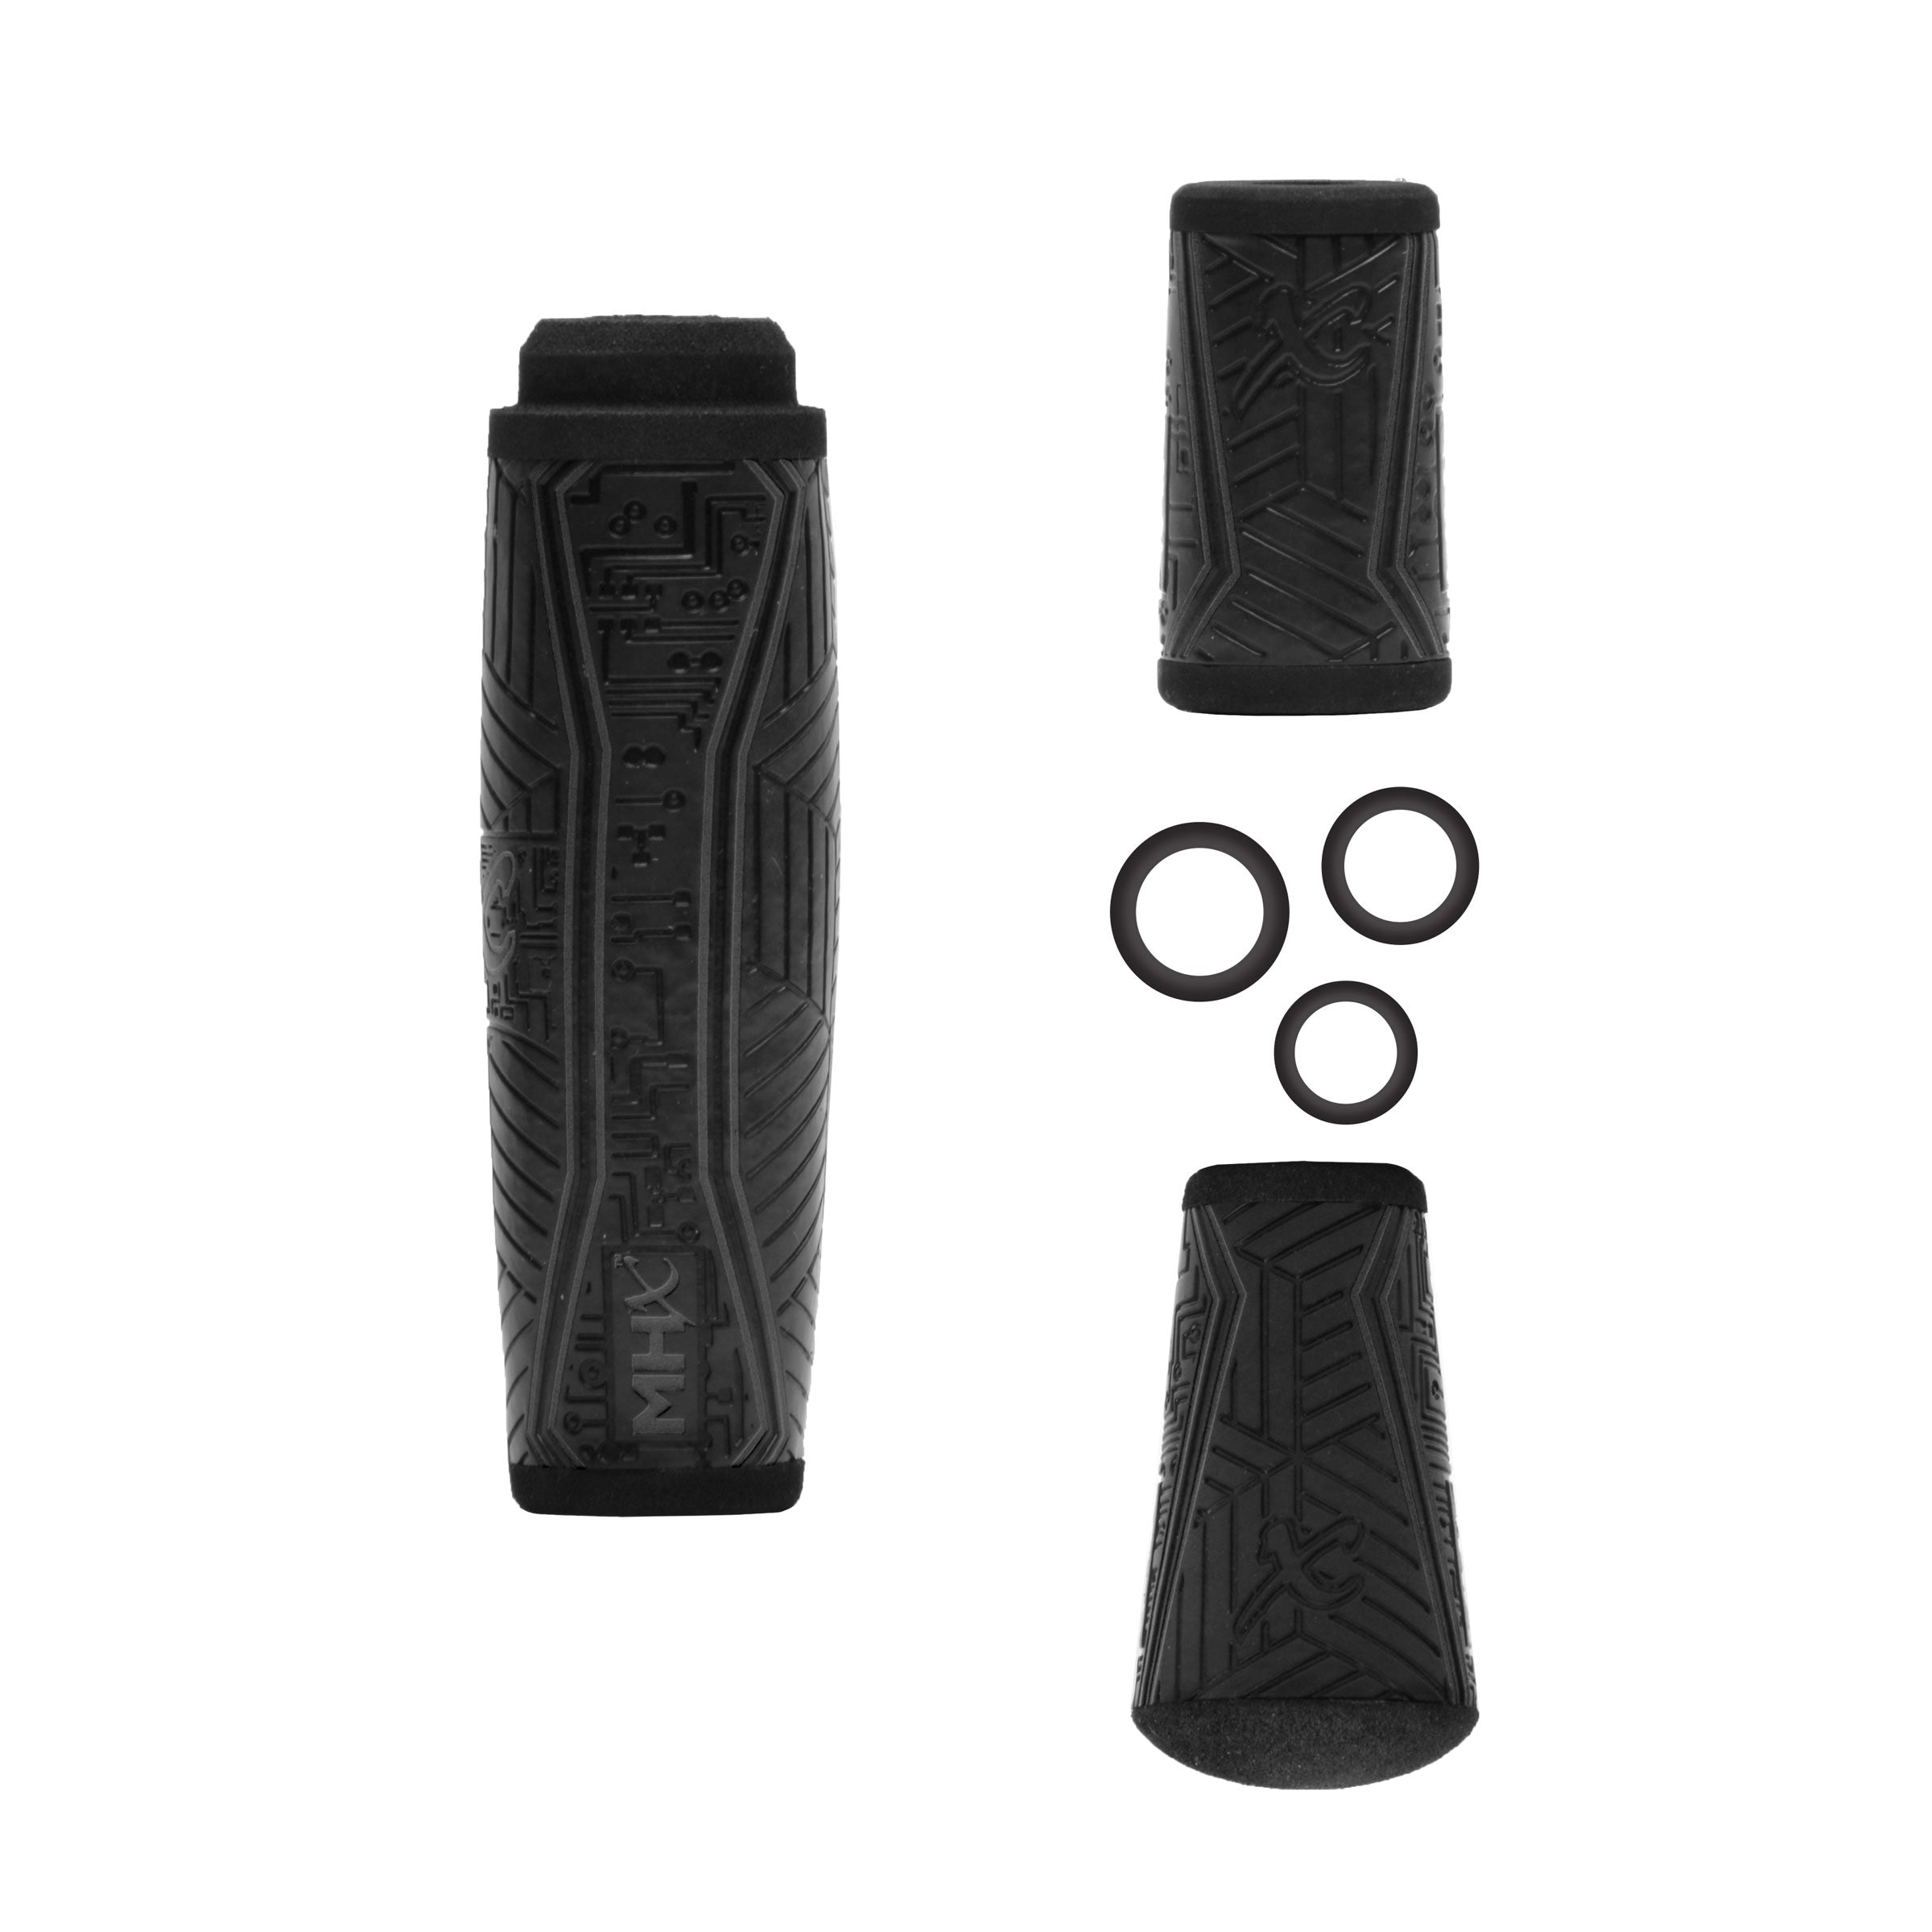 MHX Winn Split Grip Kits for Casting Rods MHX Winndry Black & Green / 3.87 in. Rear | 1.75 in. Fore